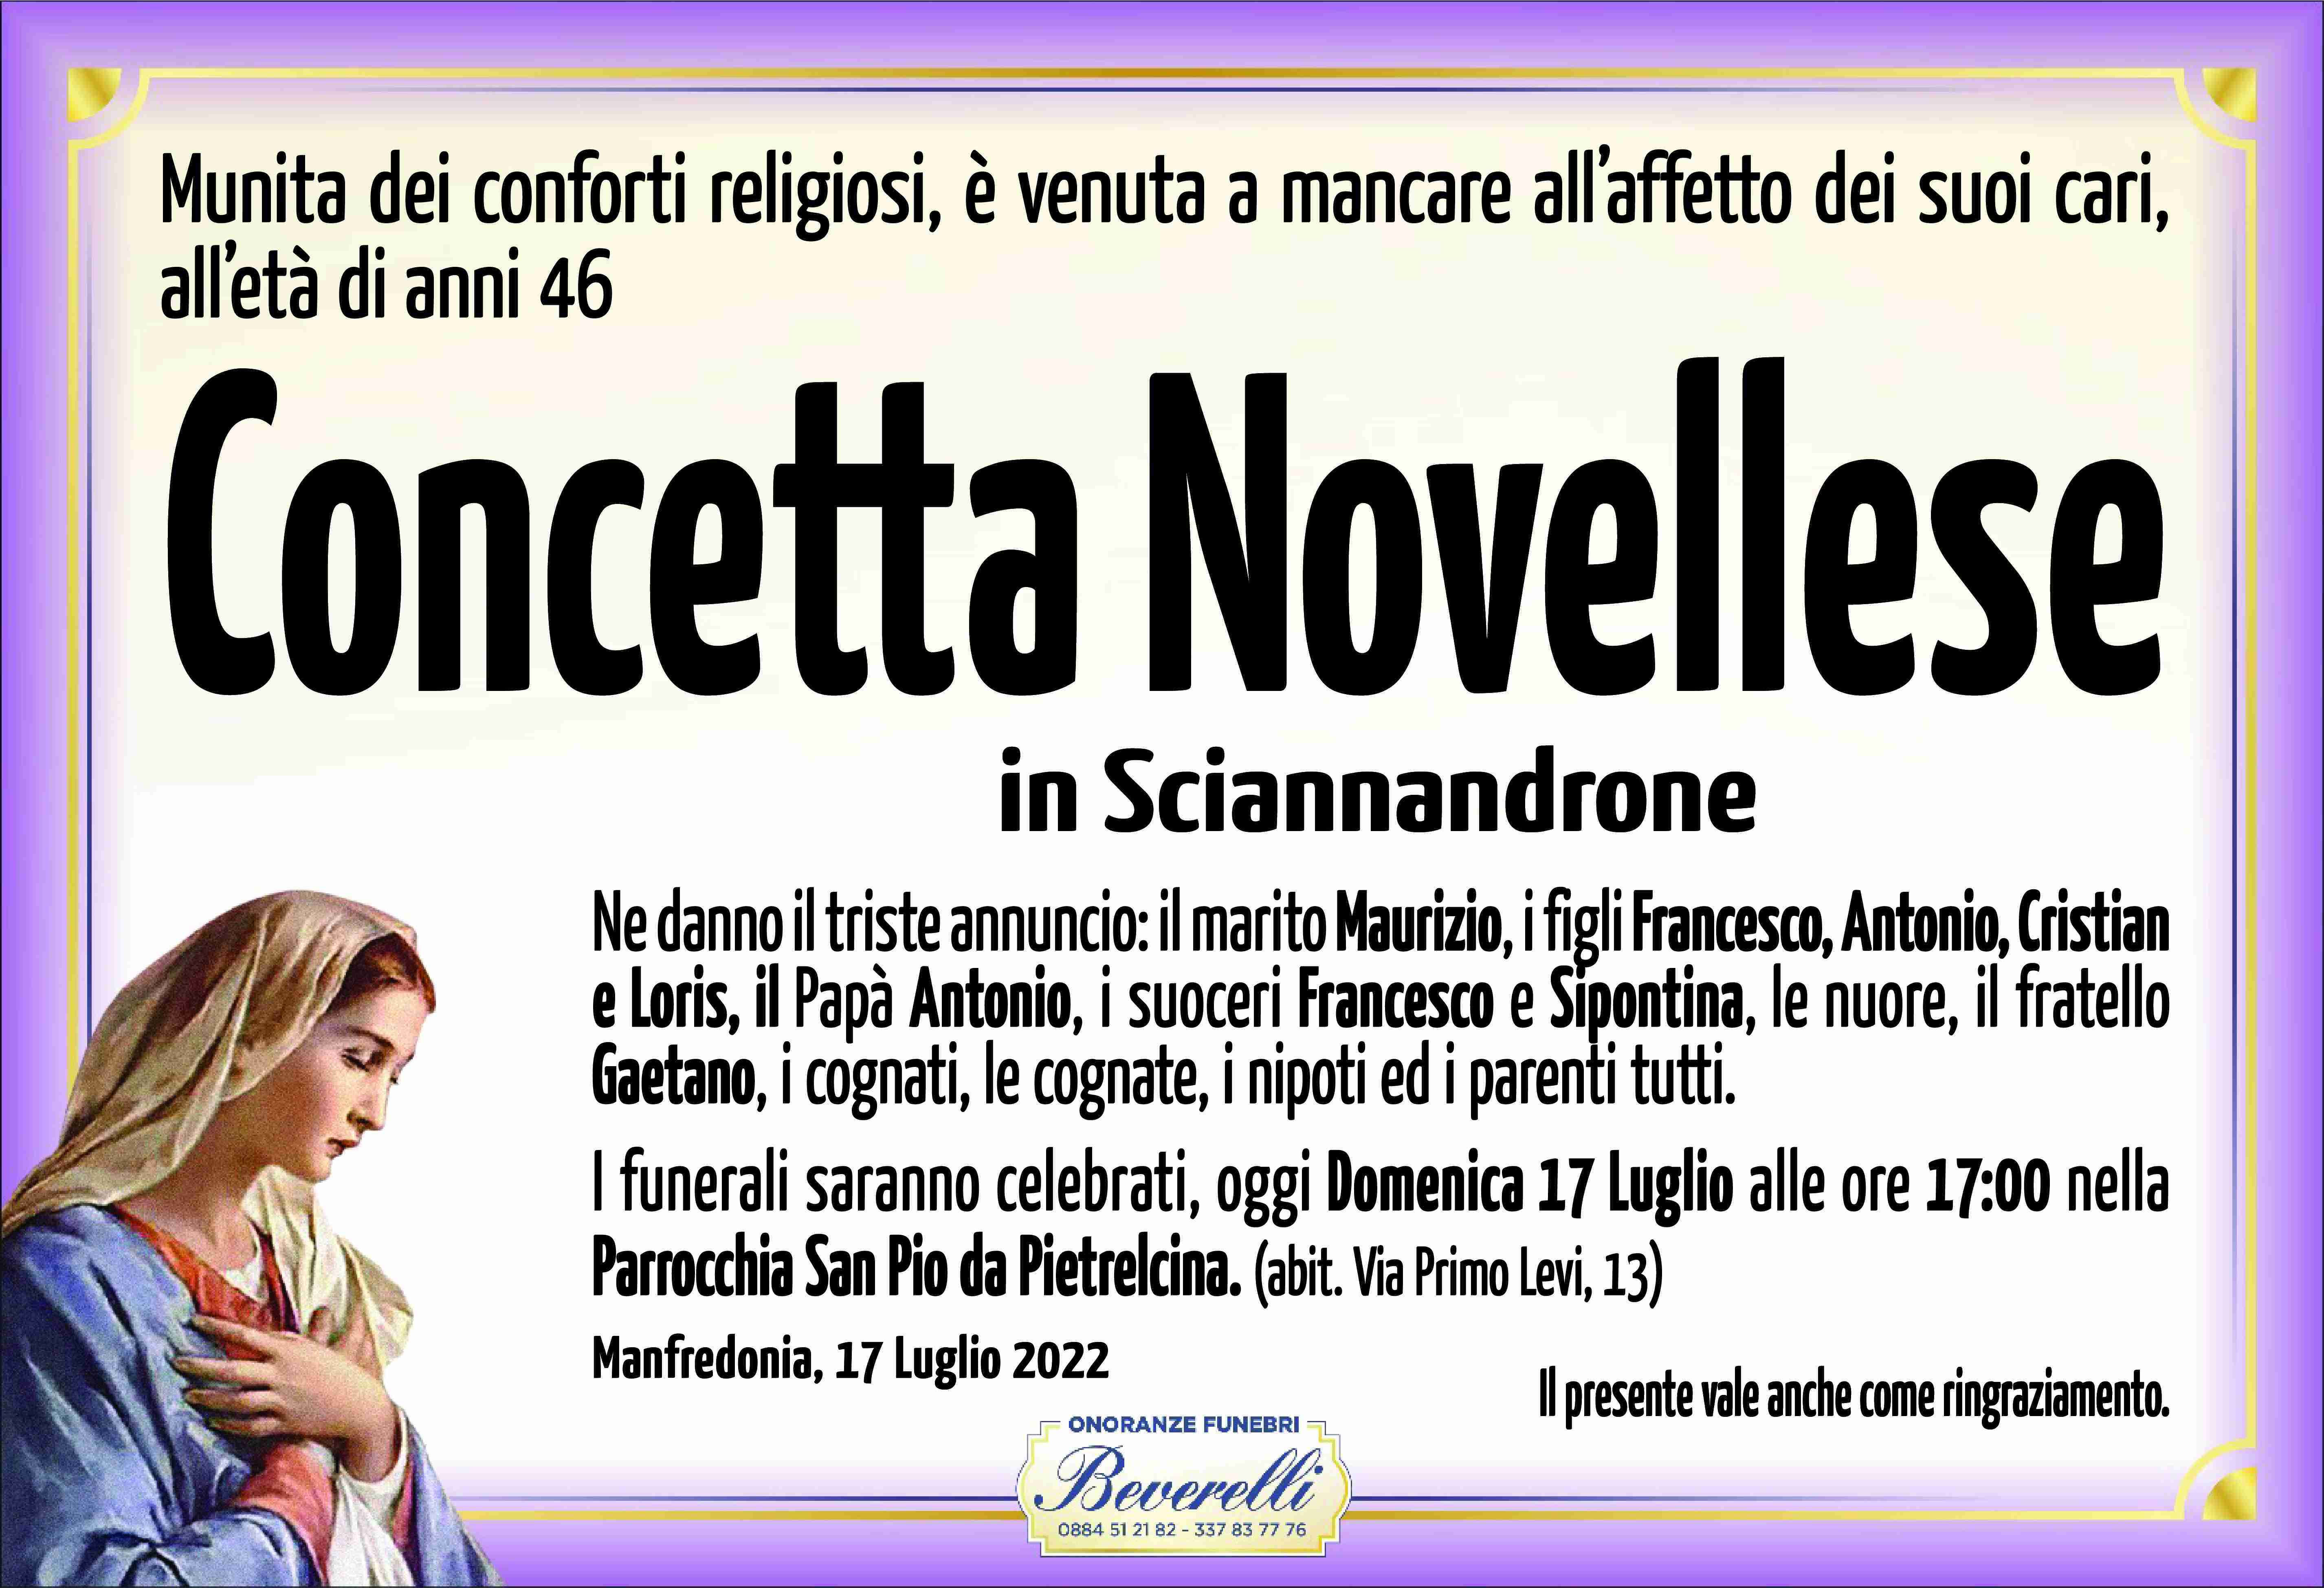 Concetta Novellese